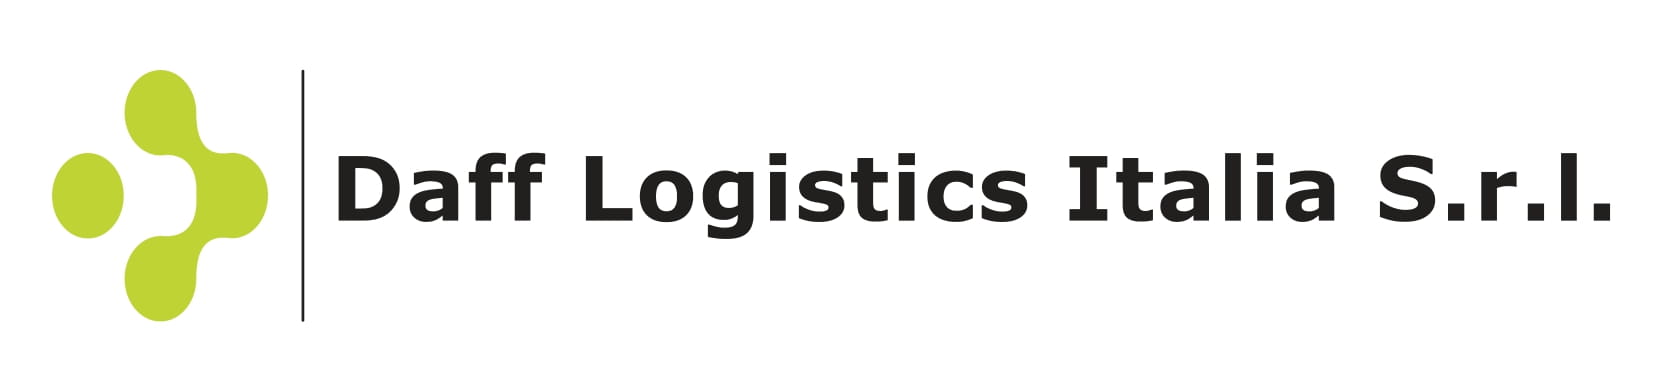 Logo Daff Logistics Italia - MASSIMO FORGIONE-1.jpg